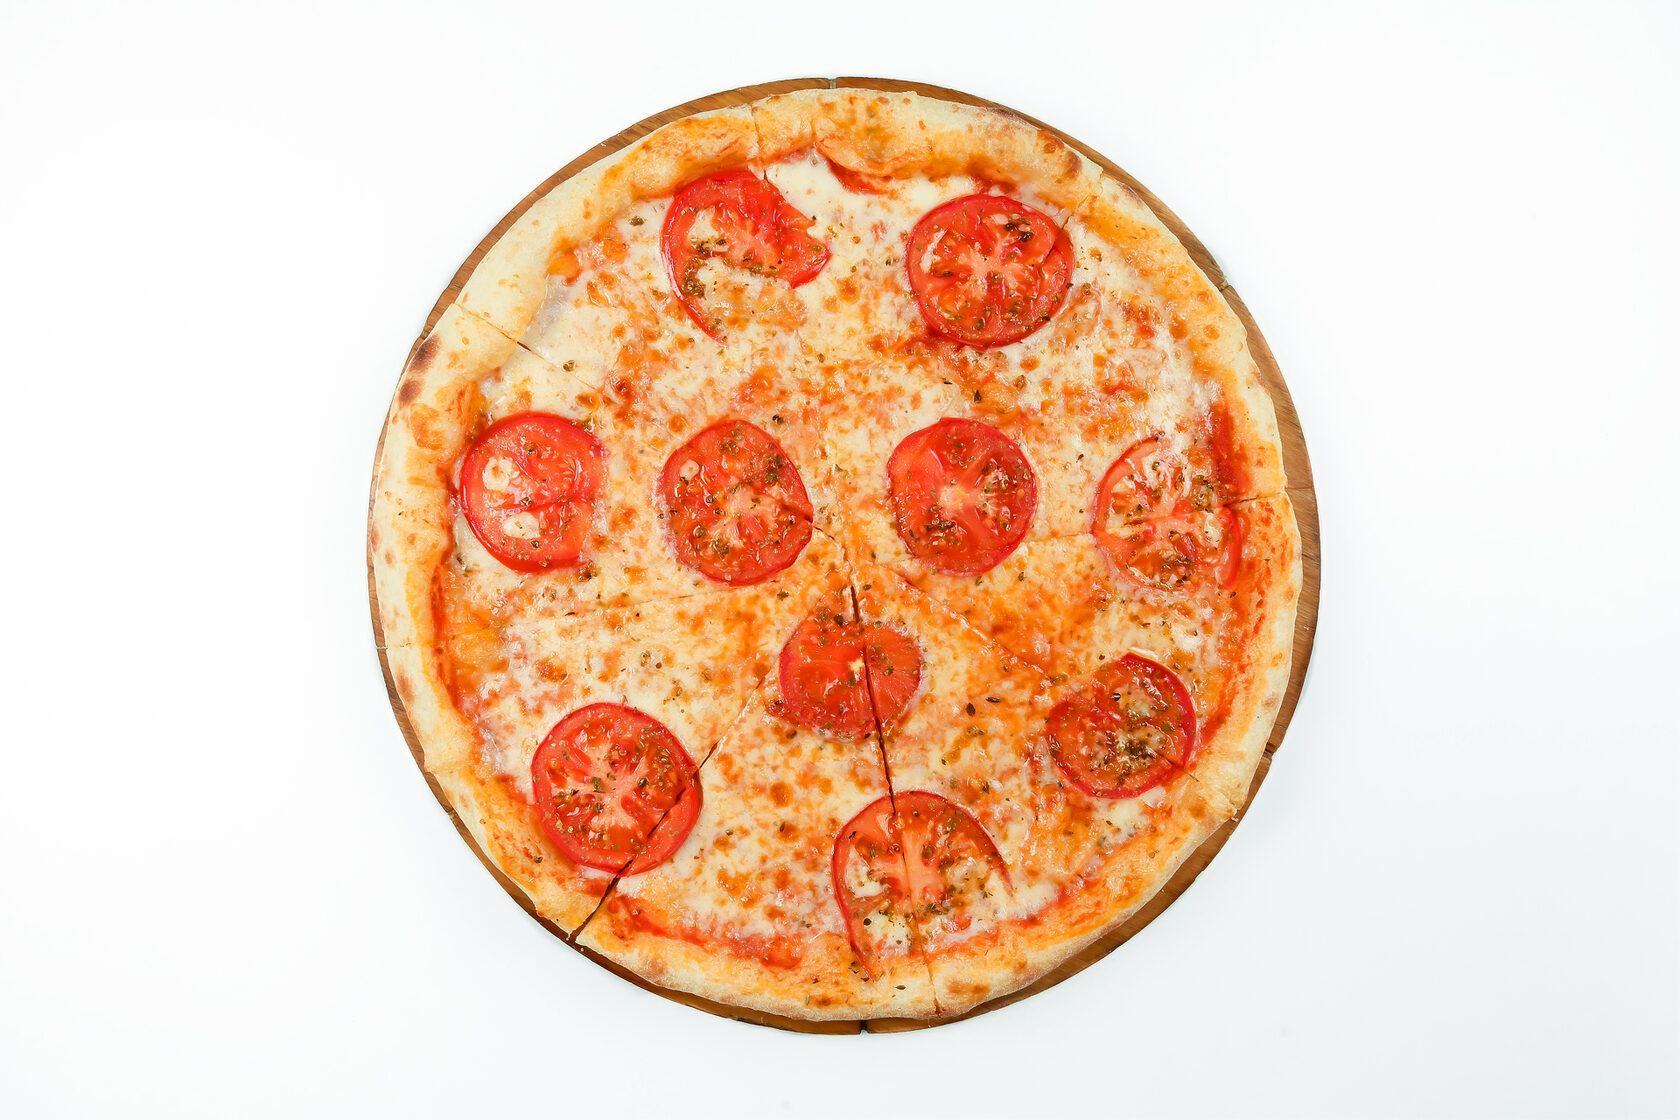 технологическая карта пицца маргарита 40 см фото 113